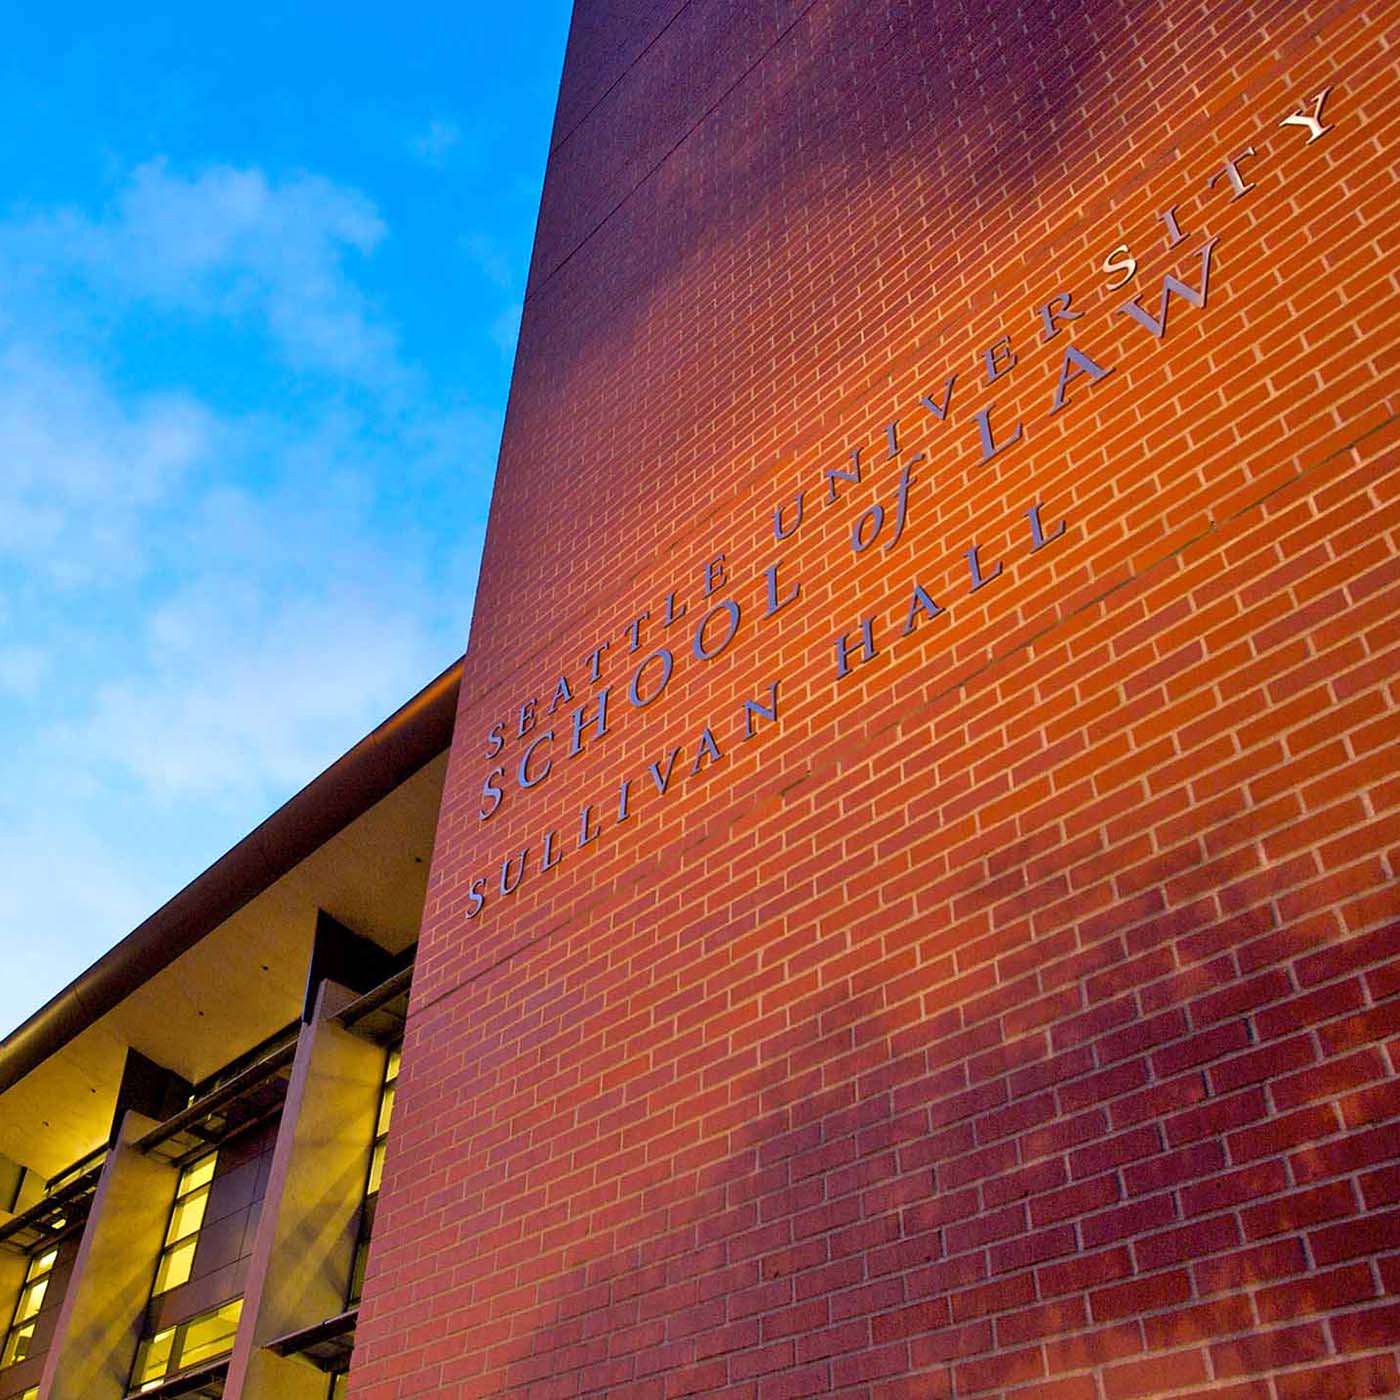 Sullivan Hall brick siding with text 'Seattle University School of Law Sullivan Hall'